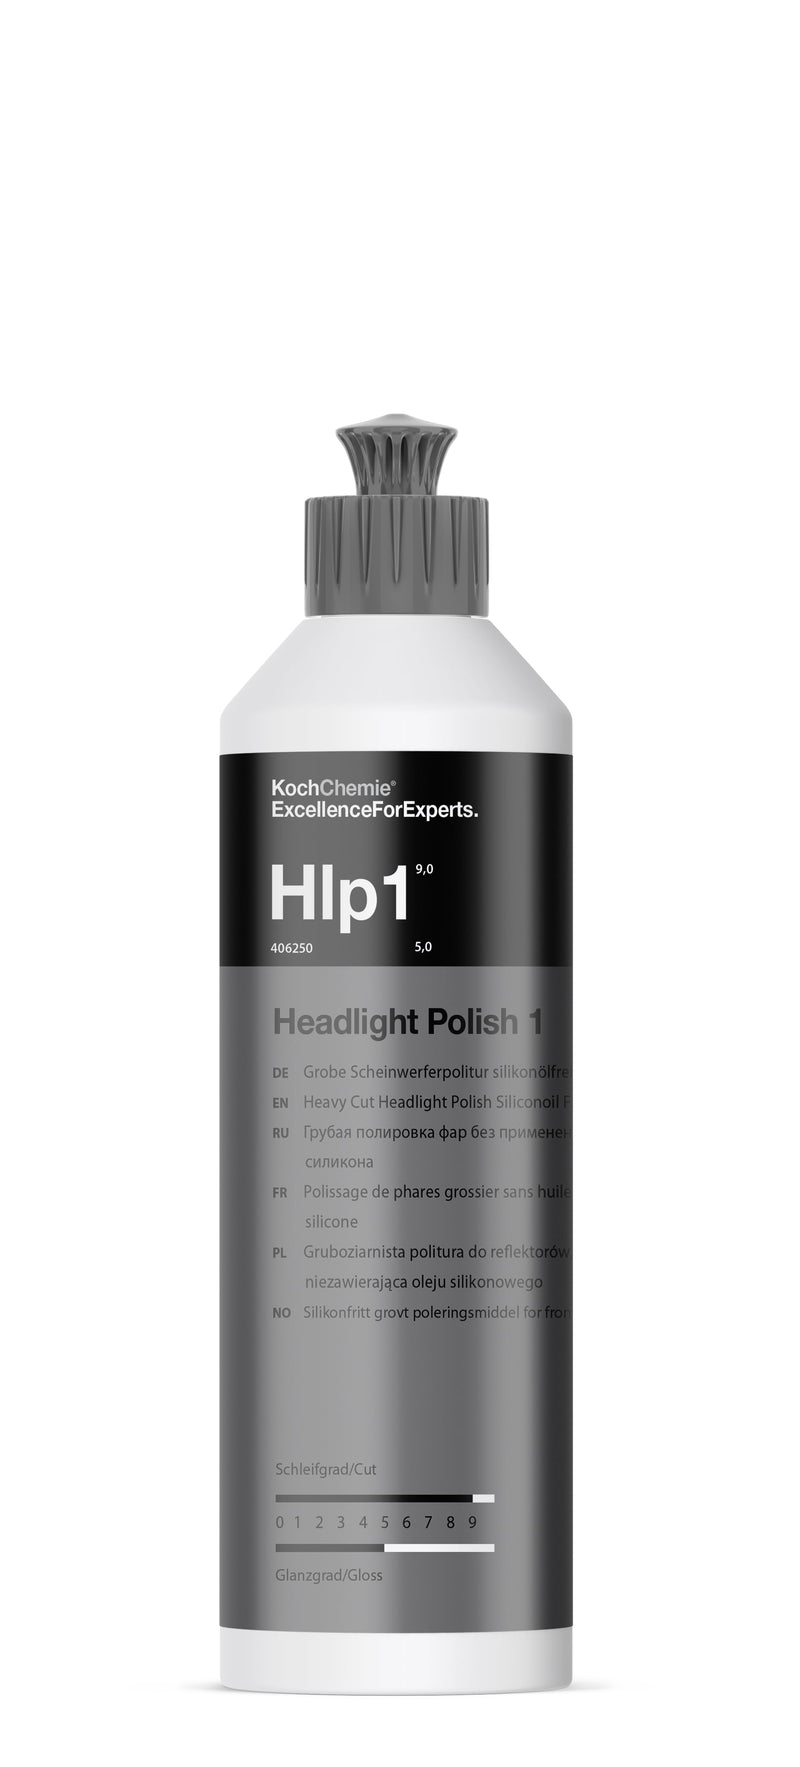 Koch Chemie Headlight Polish 1, 250ml Heavy-Cut P1000, Silikonfri